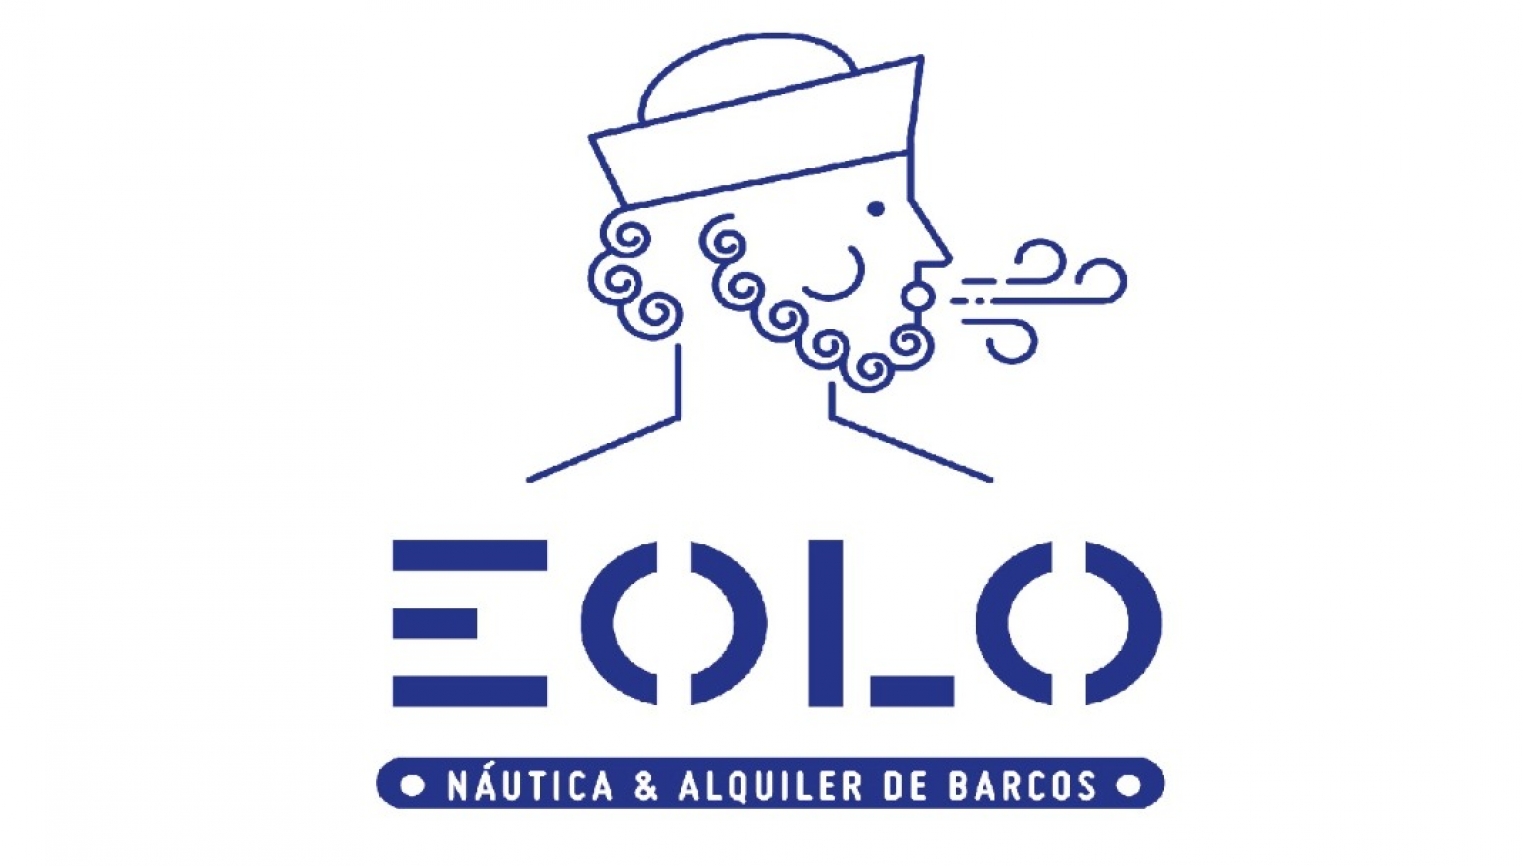 Eolo Náutica & Alquiler de Barcos - foto 1/1